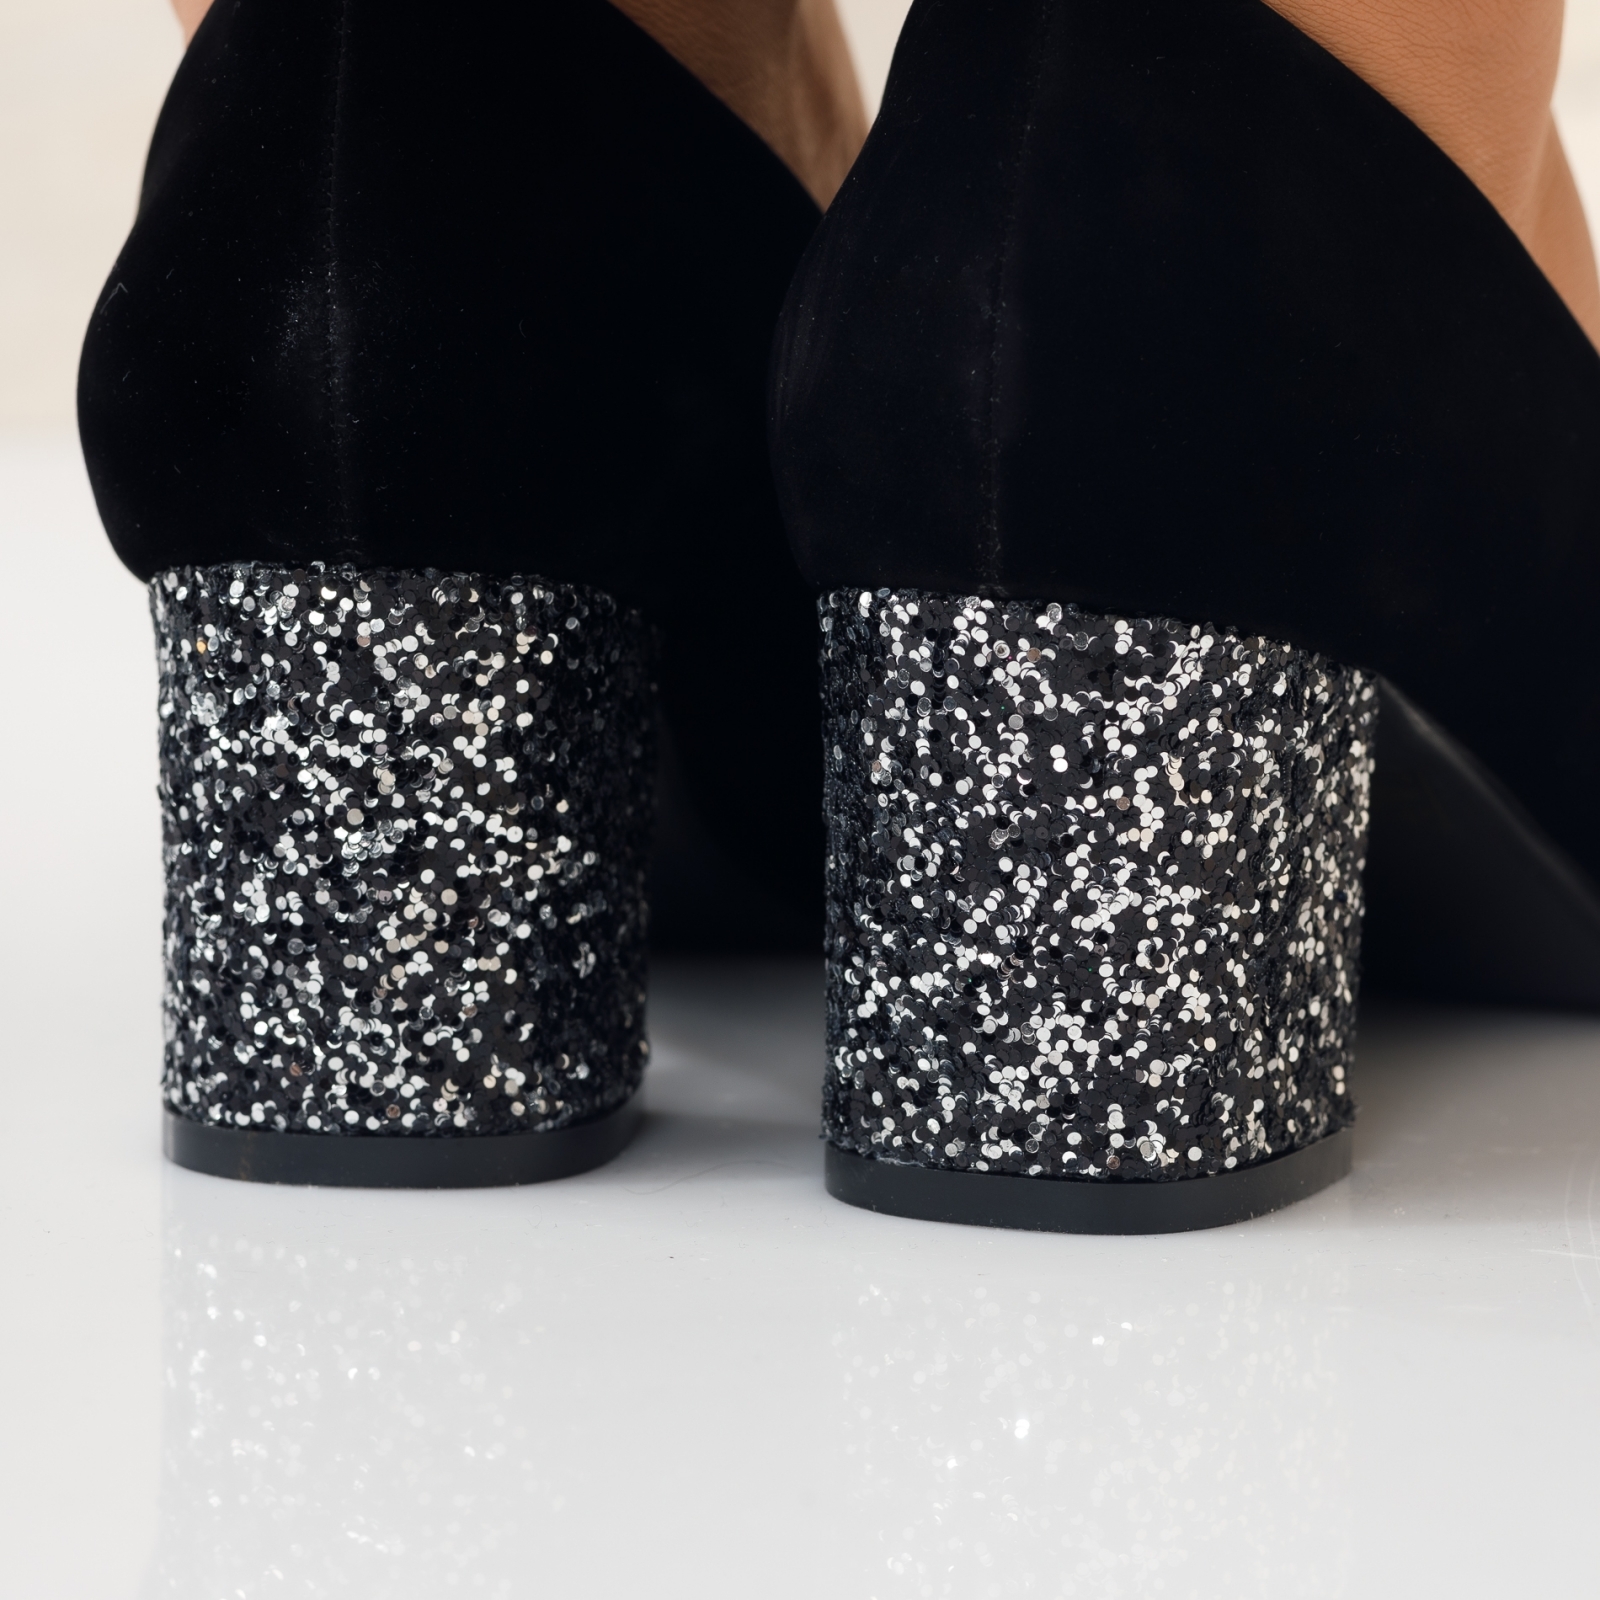 Pantofi Dama cu Toc Isabela Negri #3920M